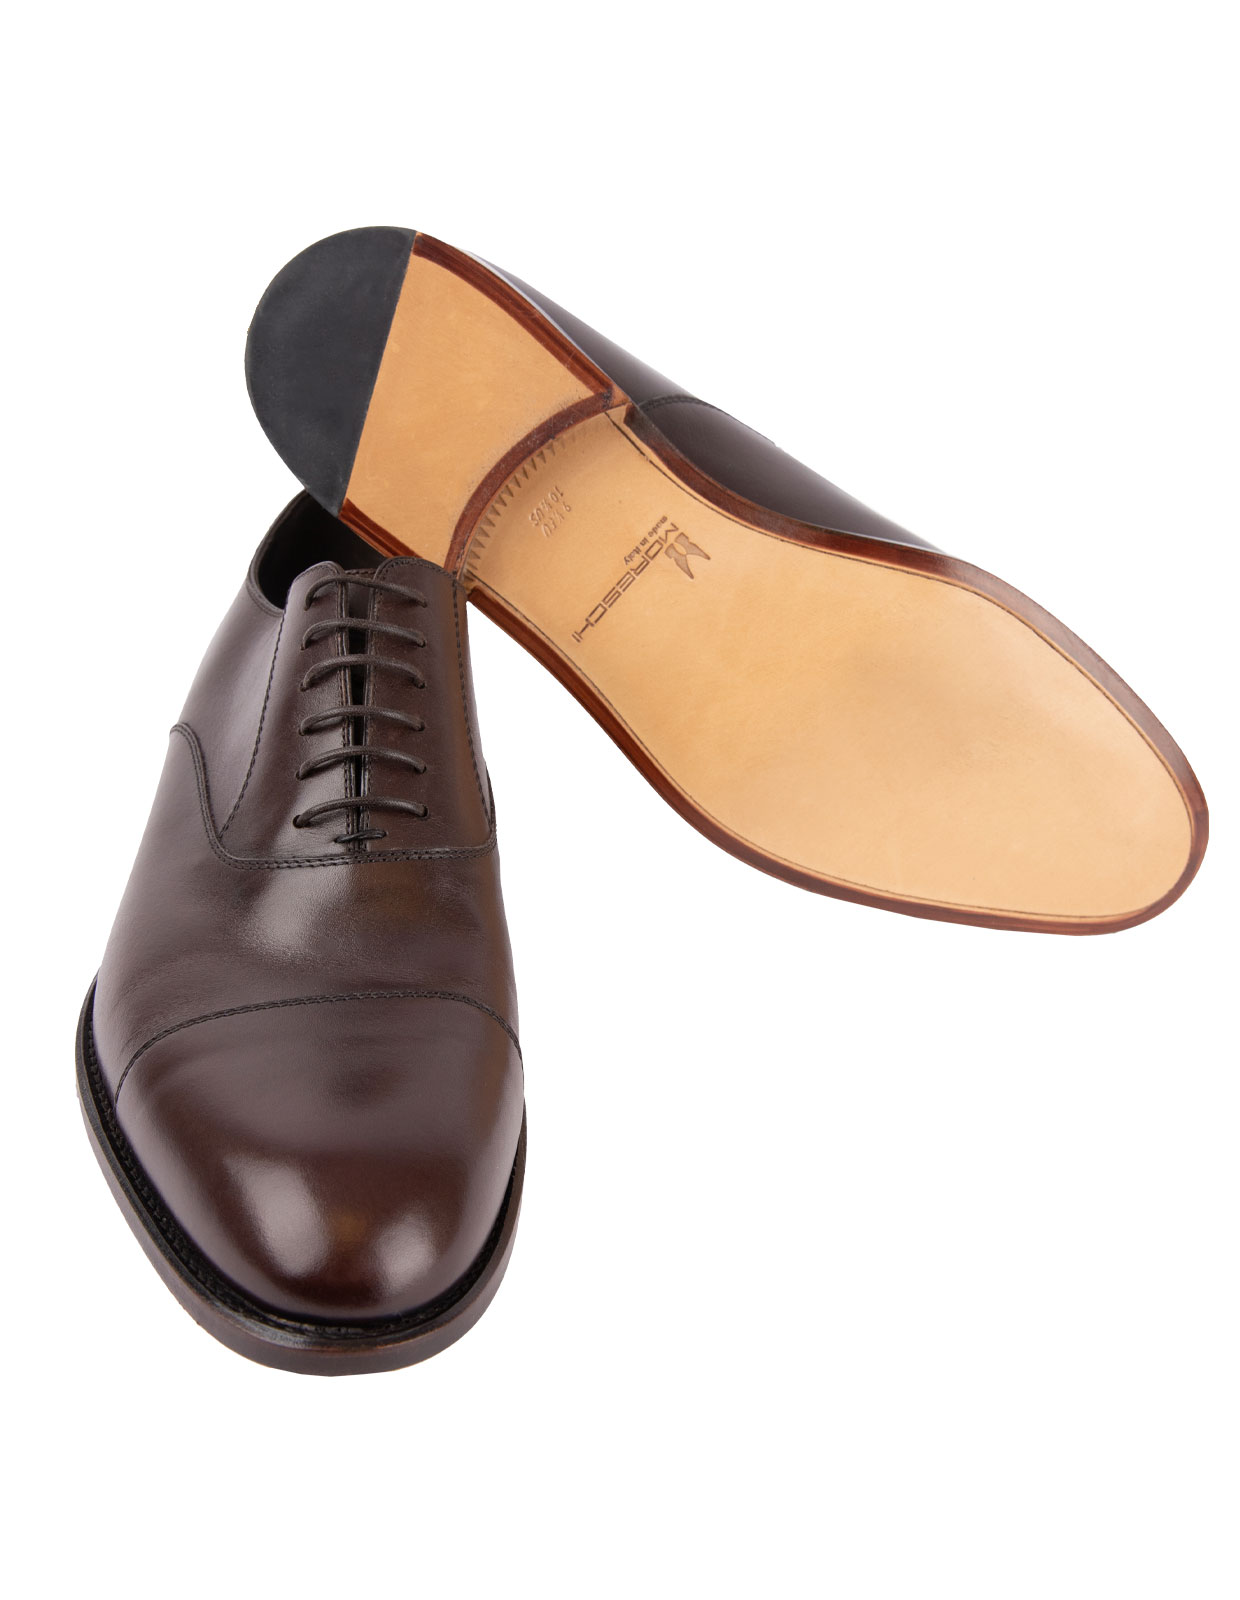 New York Oxford Shoes Calfskin Brown Stl 8